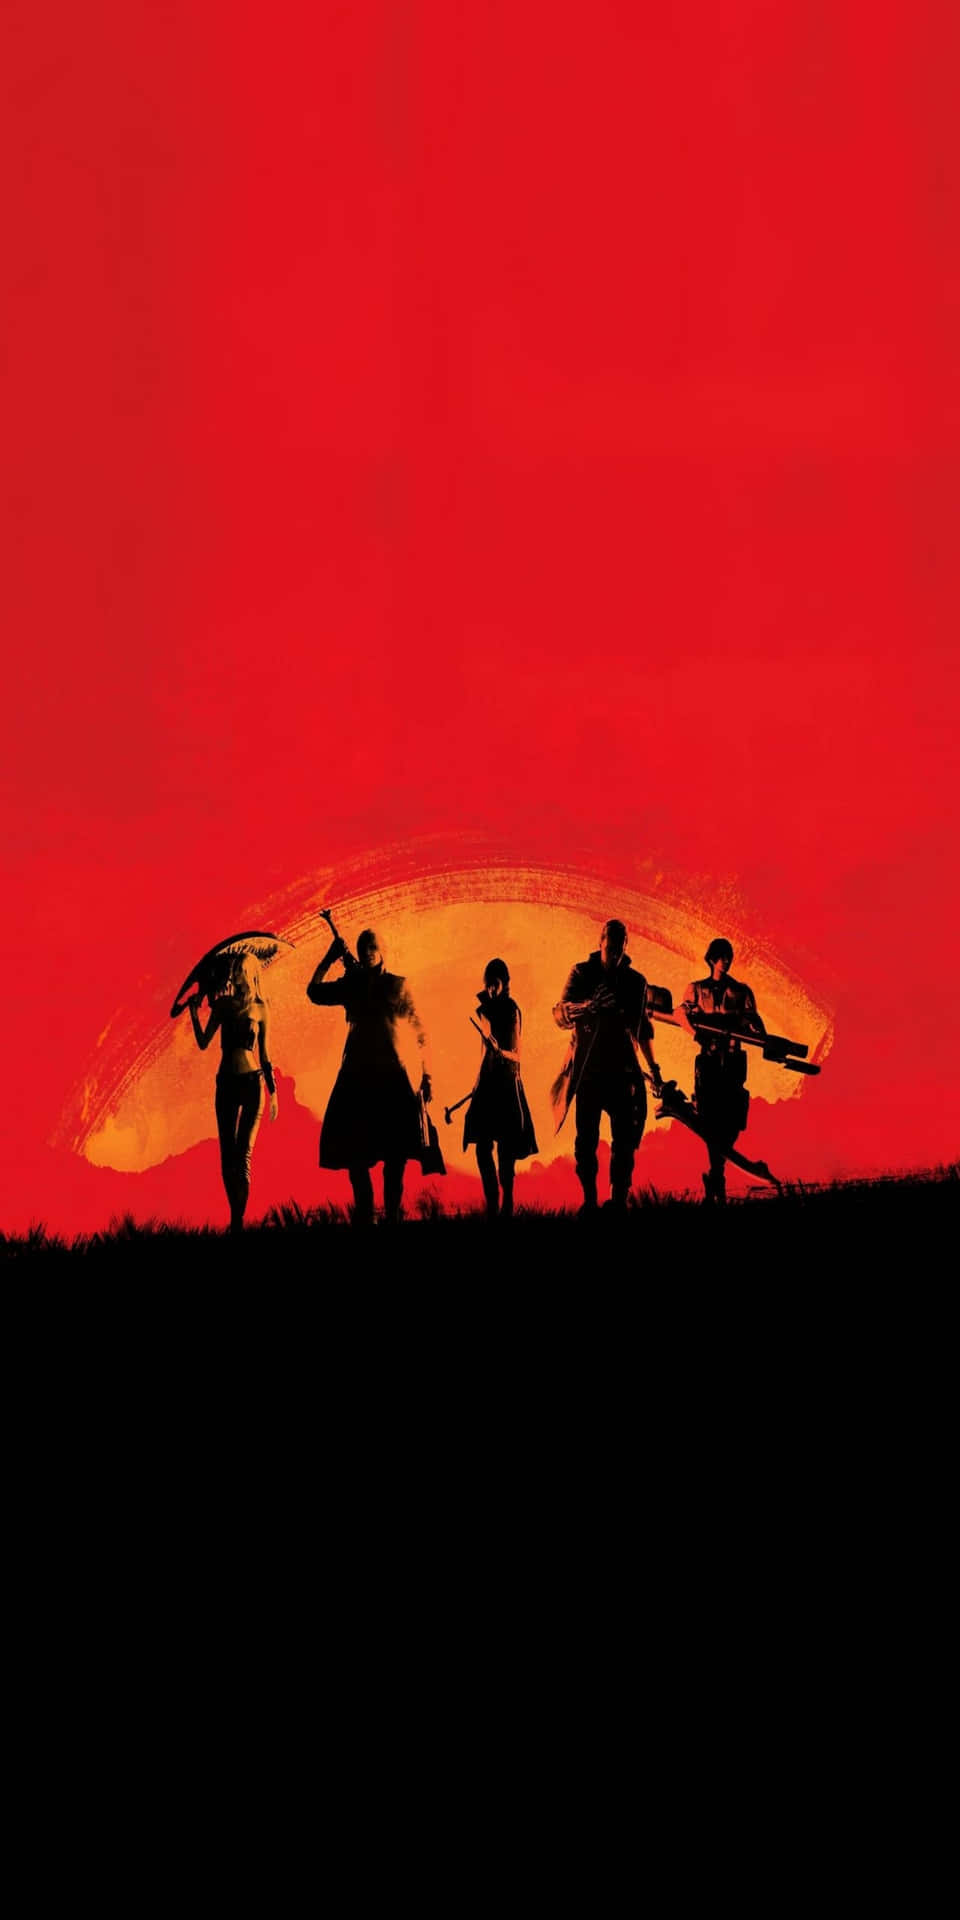 Pixel3 Sfondo Red Dead Redemption 2 Poster Pittura Rossa